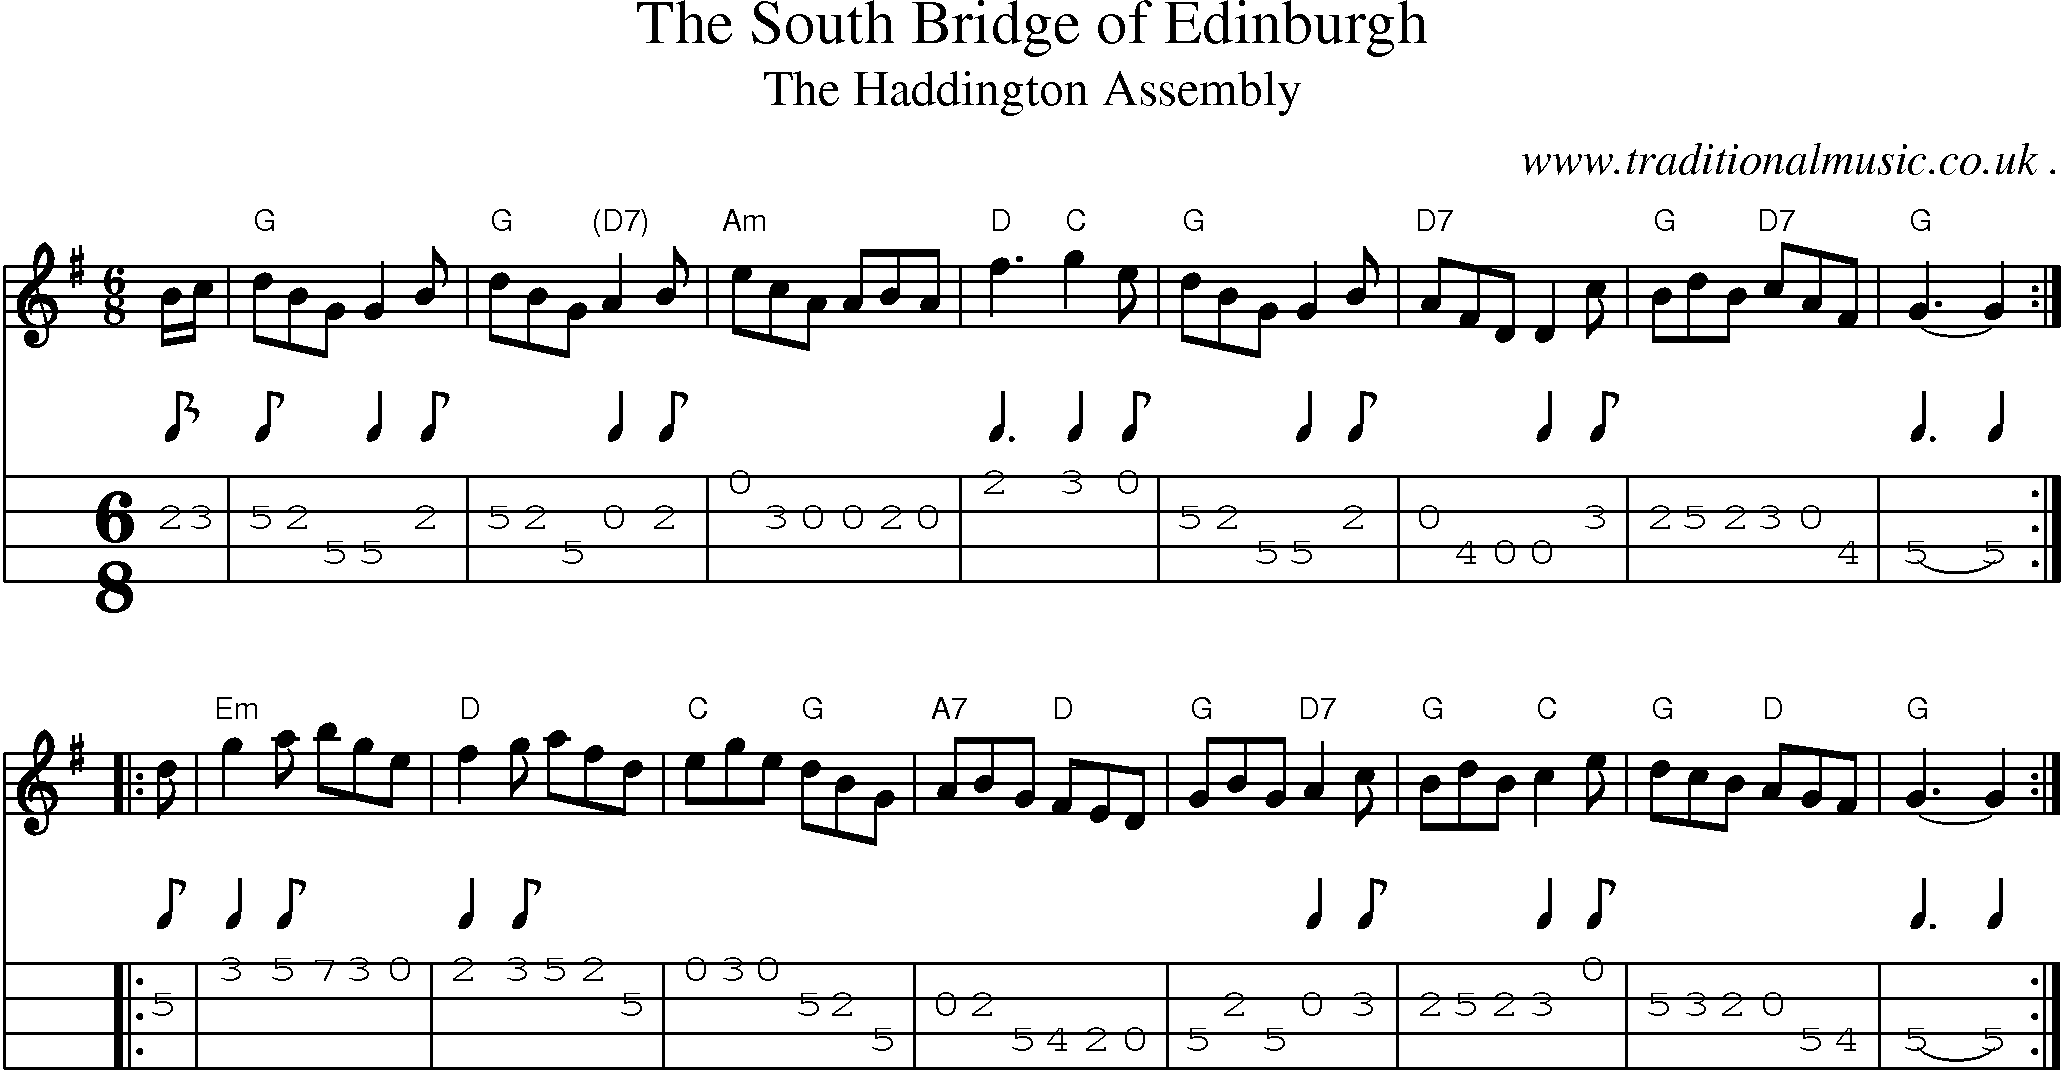 Sheet-music  score, Chords and Mandolin Tabs for The South Bridge Of Edinburgh